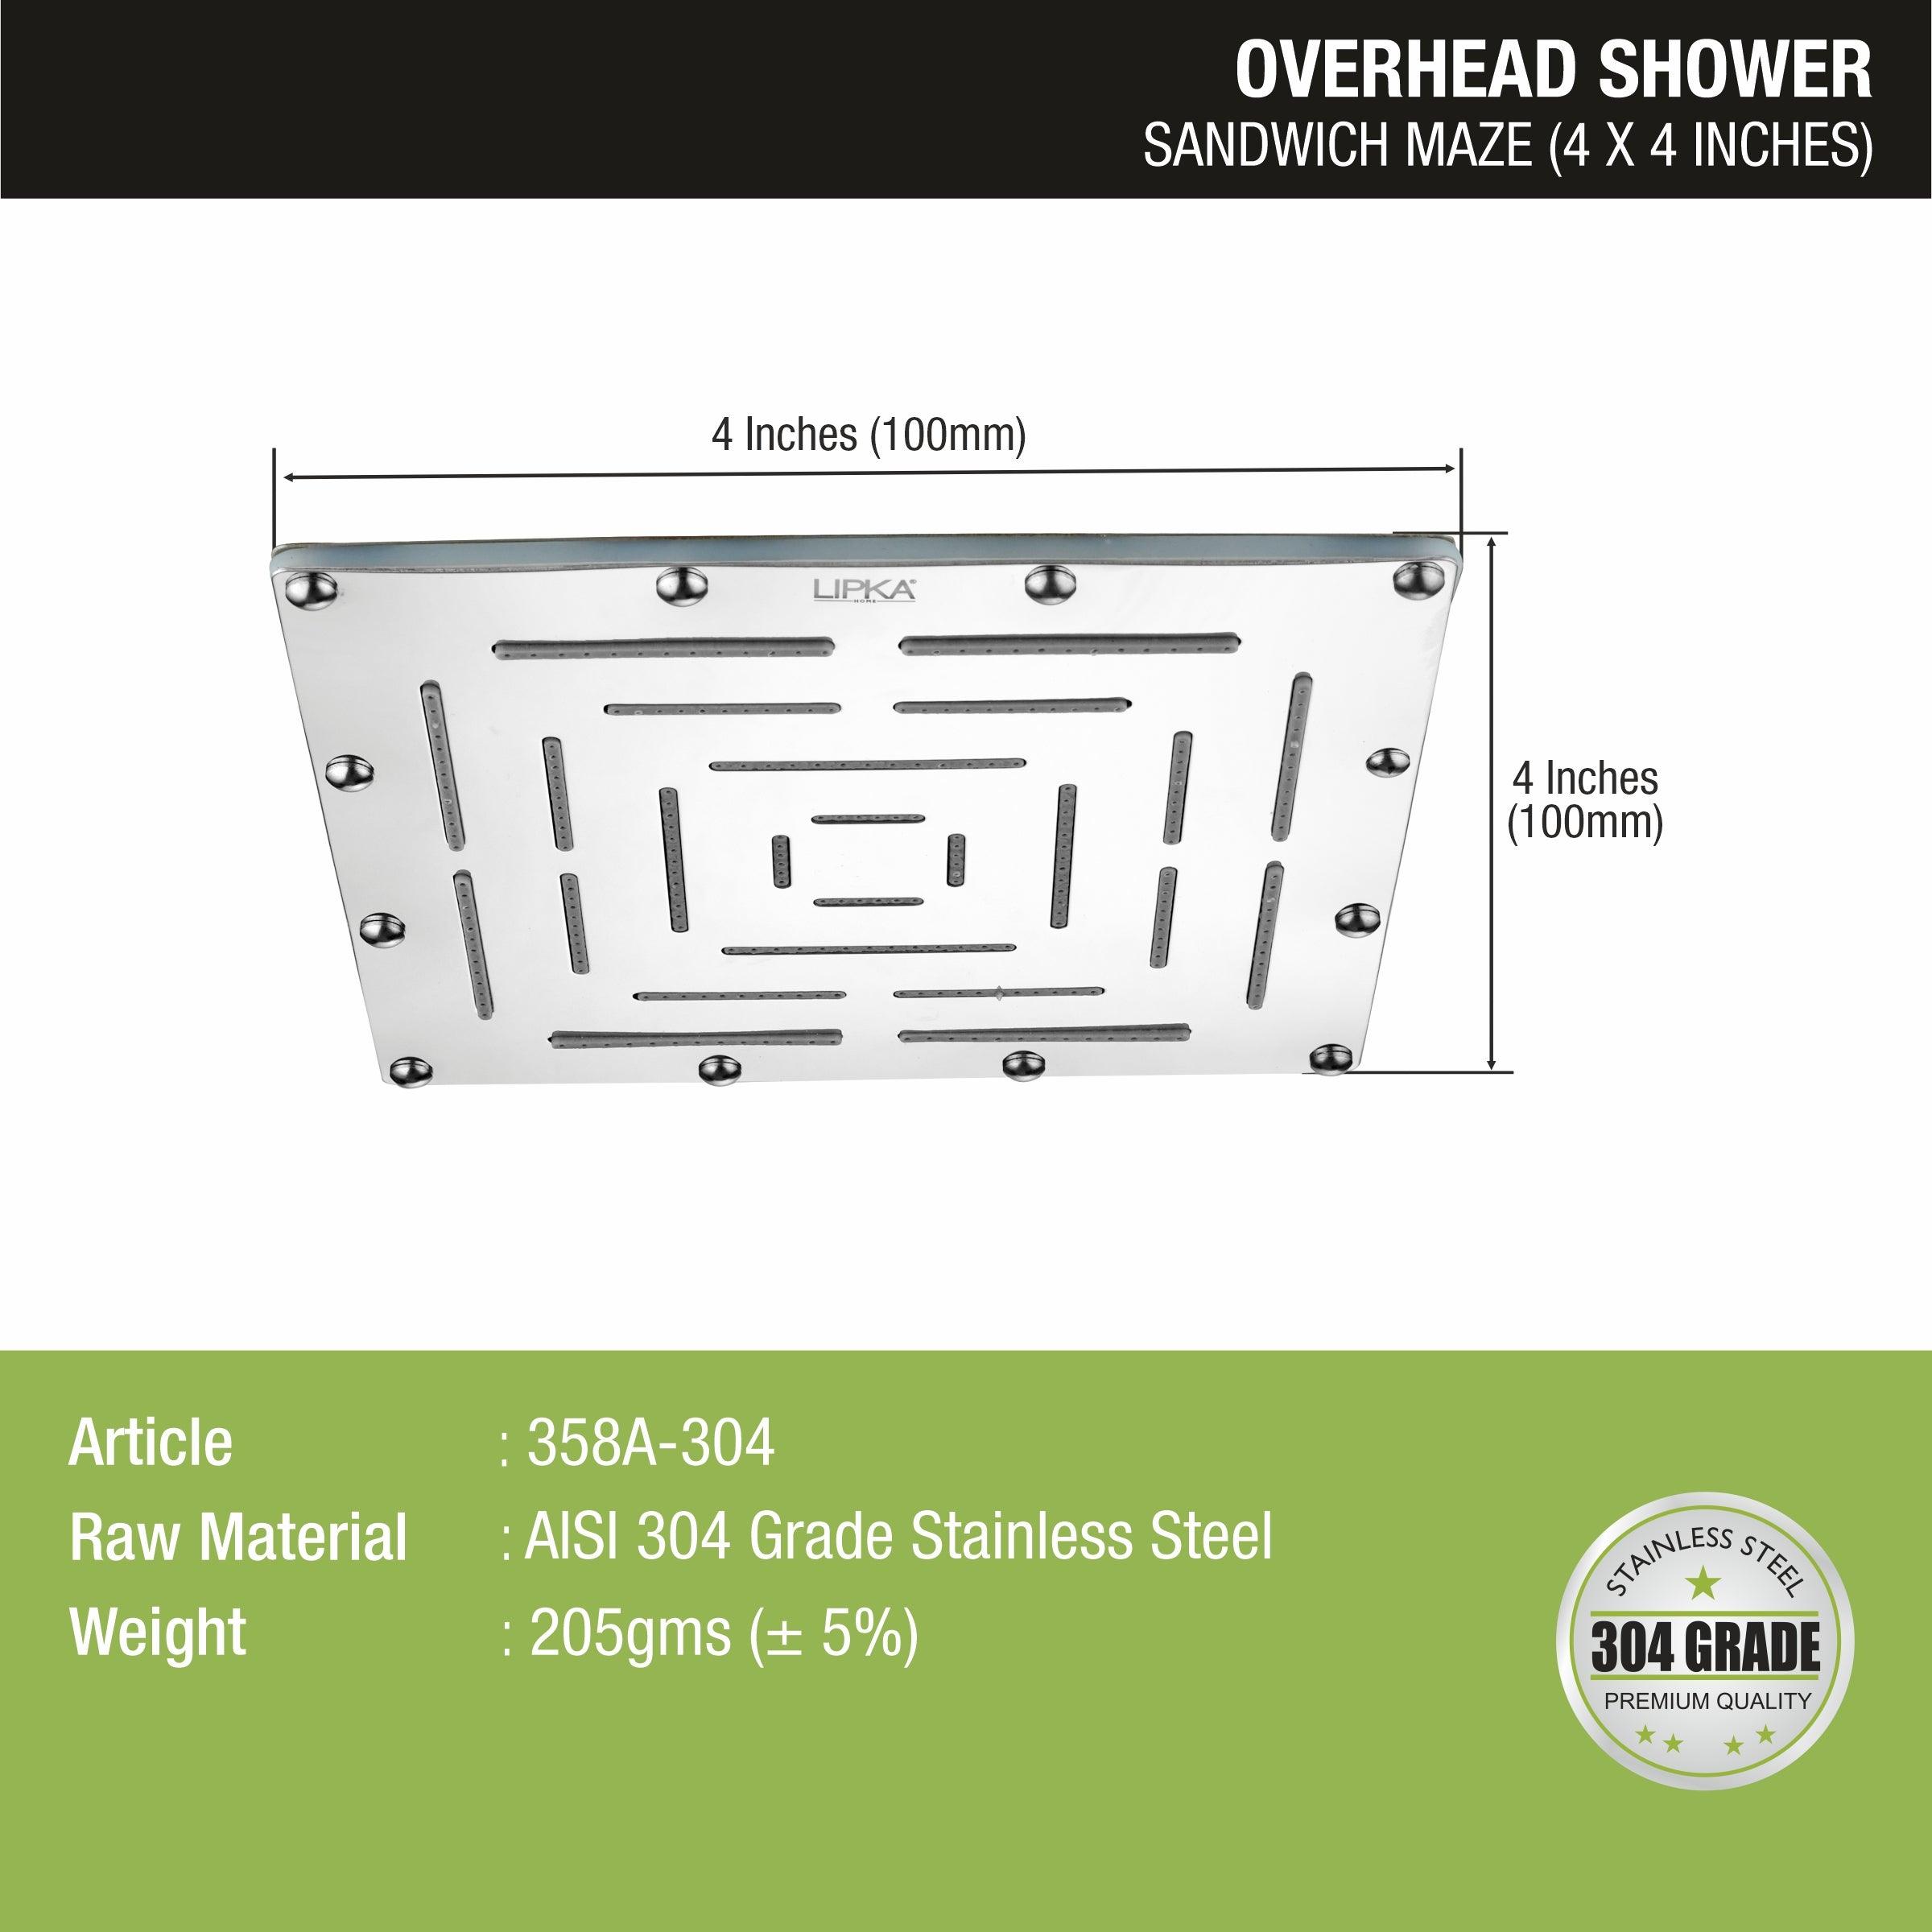 Sandwich Maze 304-Grade Overhead Rain Shower (4 x 4 Inches) sizes and dimensions